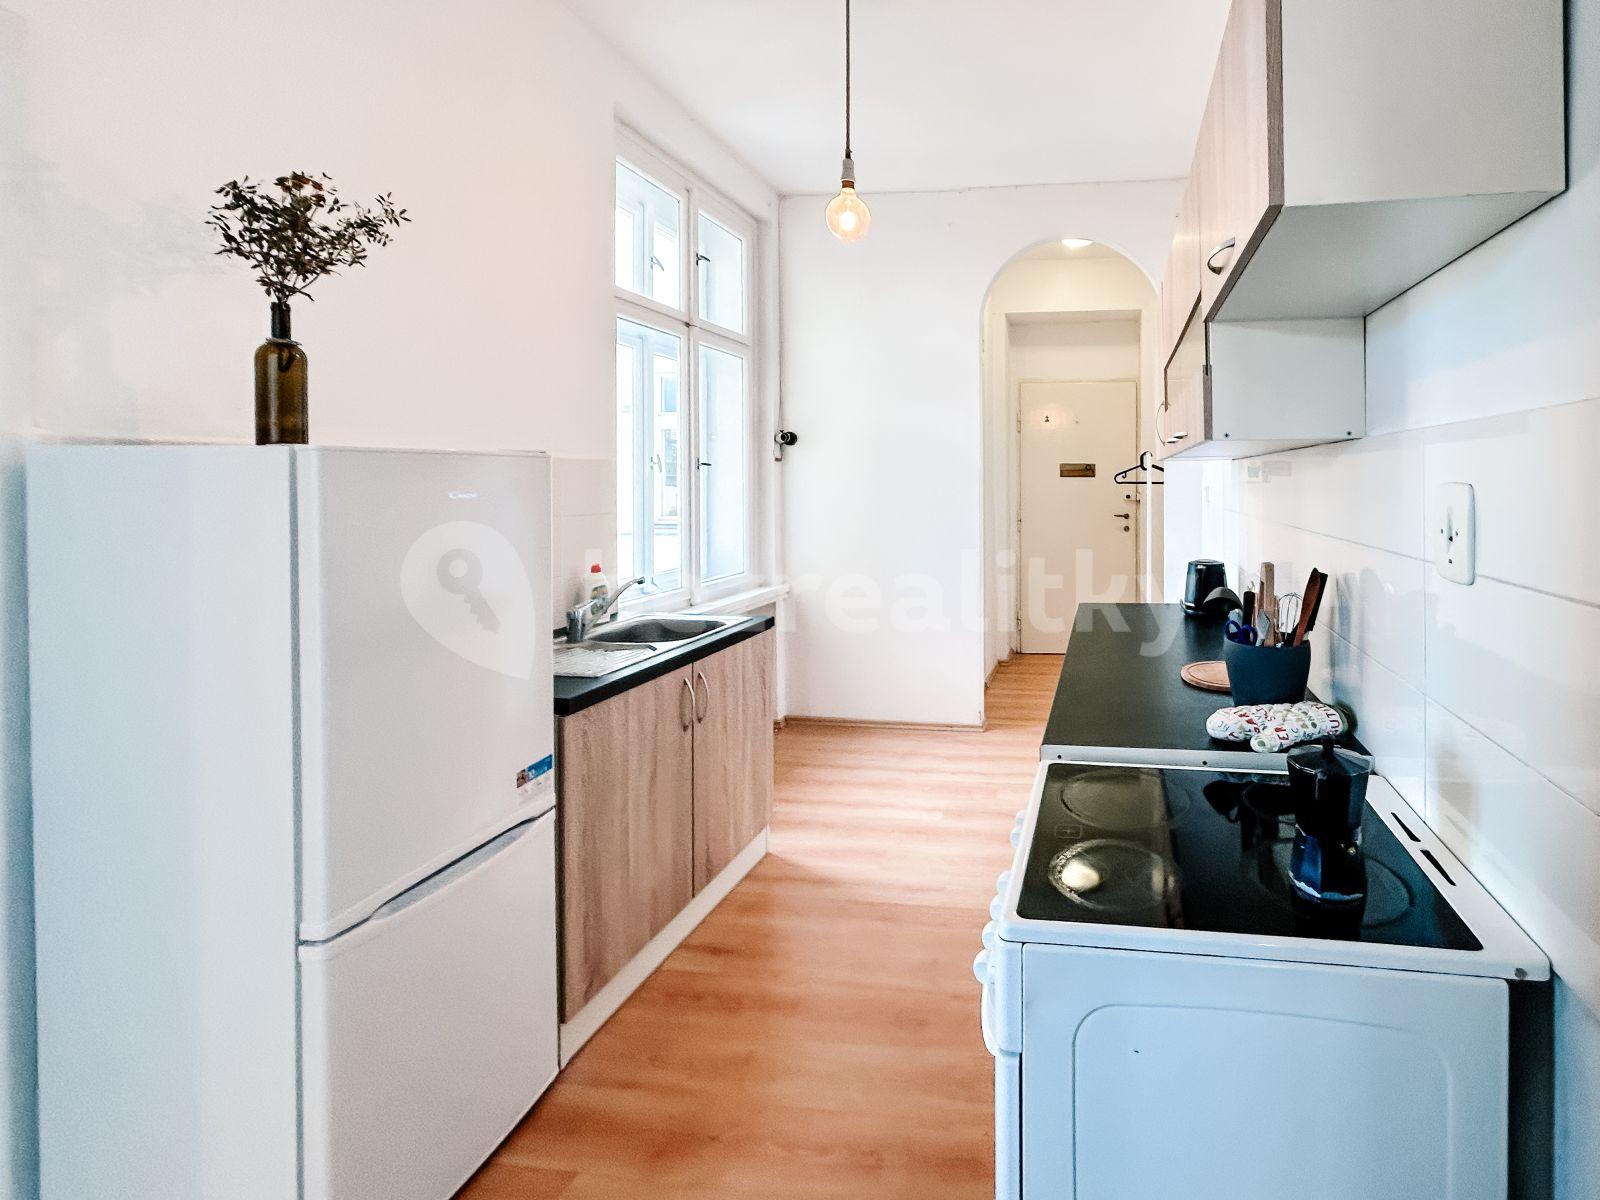 2 bedroom flat to rent, 58 m², Husinecká, Prague, Prague